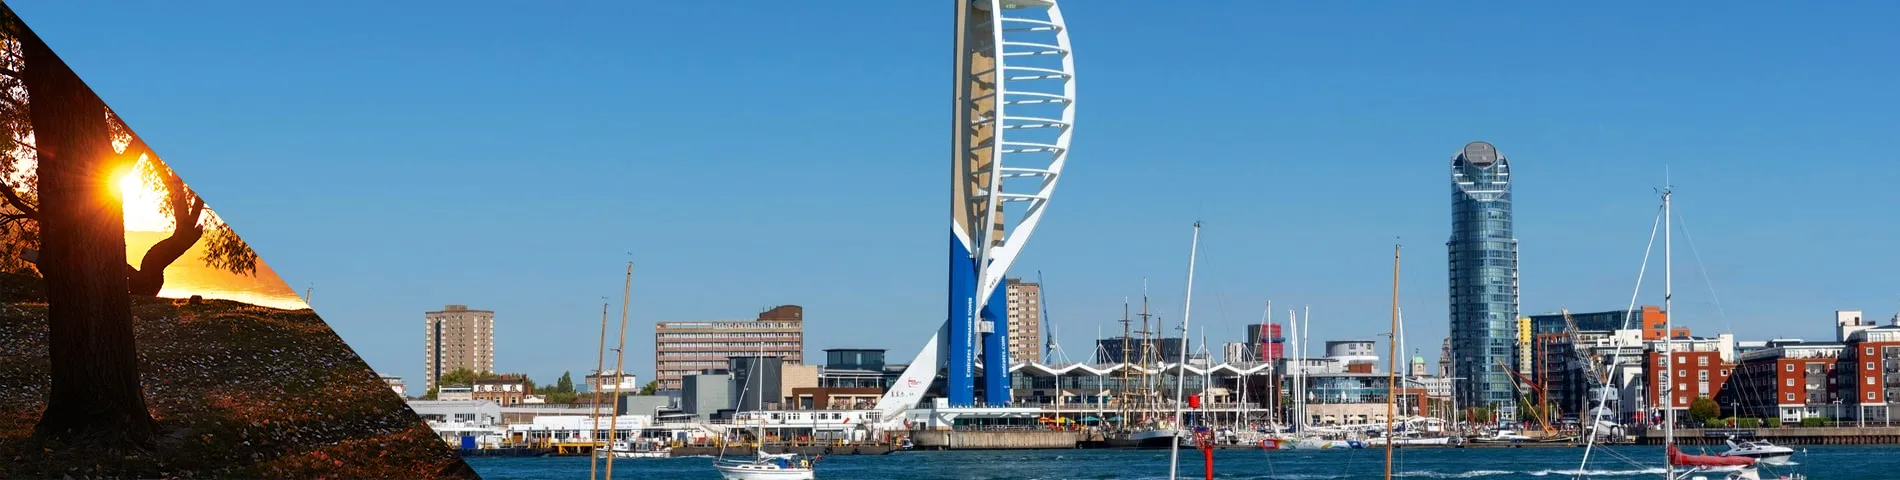 Portsmouth - 